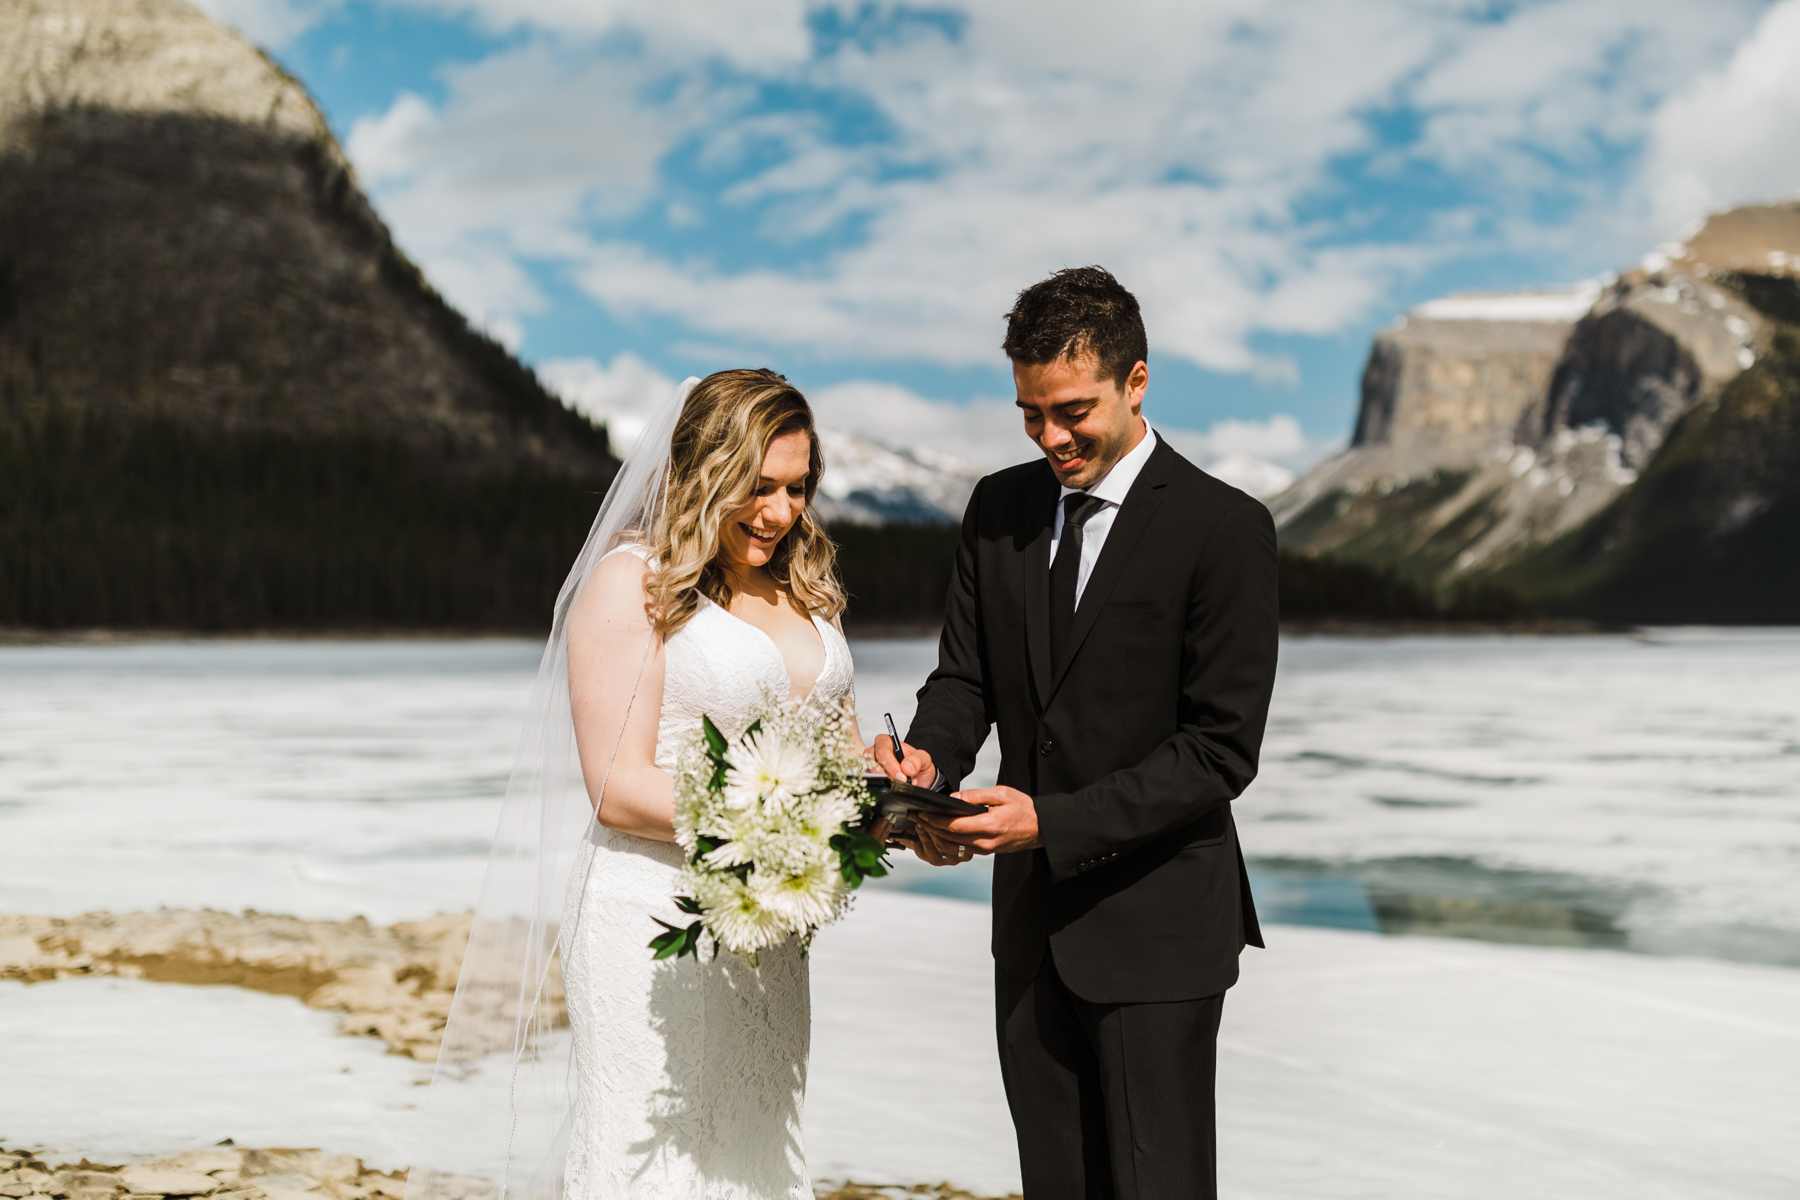 Banff Adventure Wedding Photographers for Lake Minnewanka Elopement - Image 10